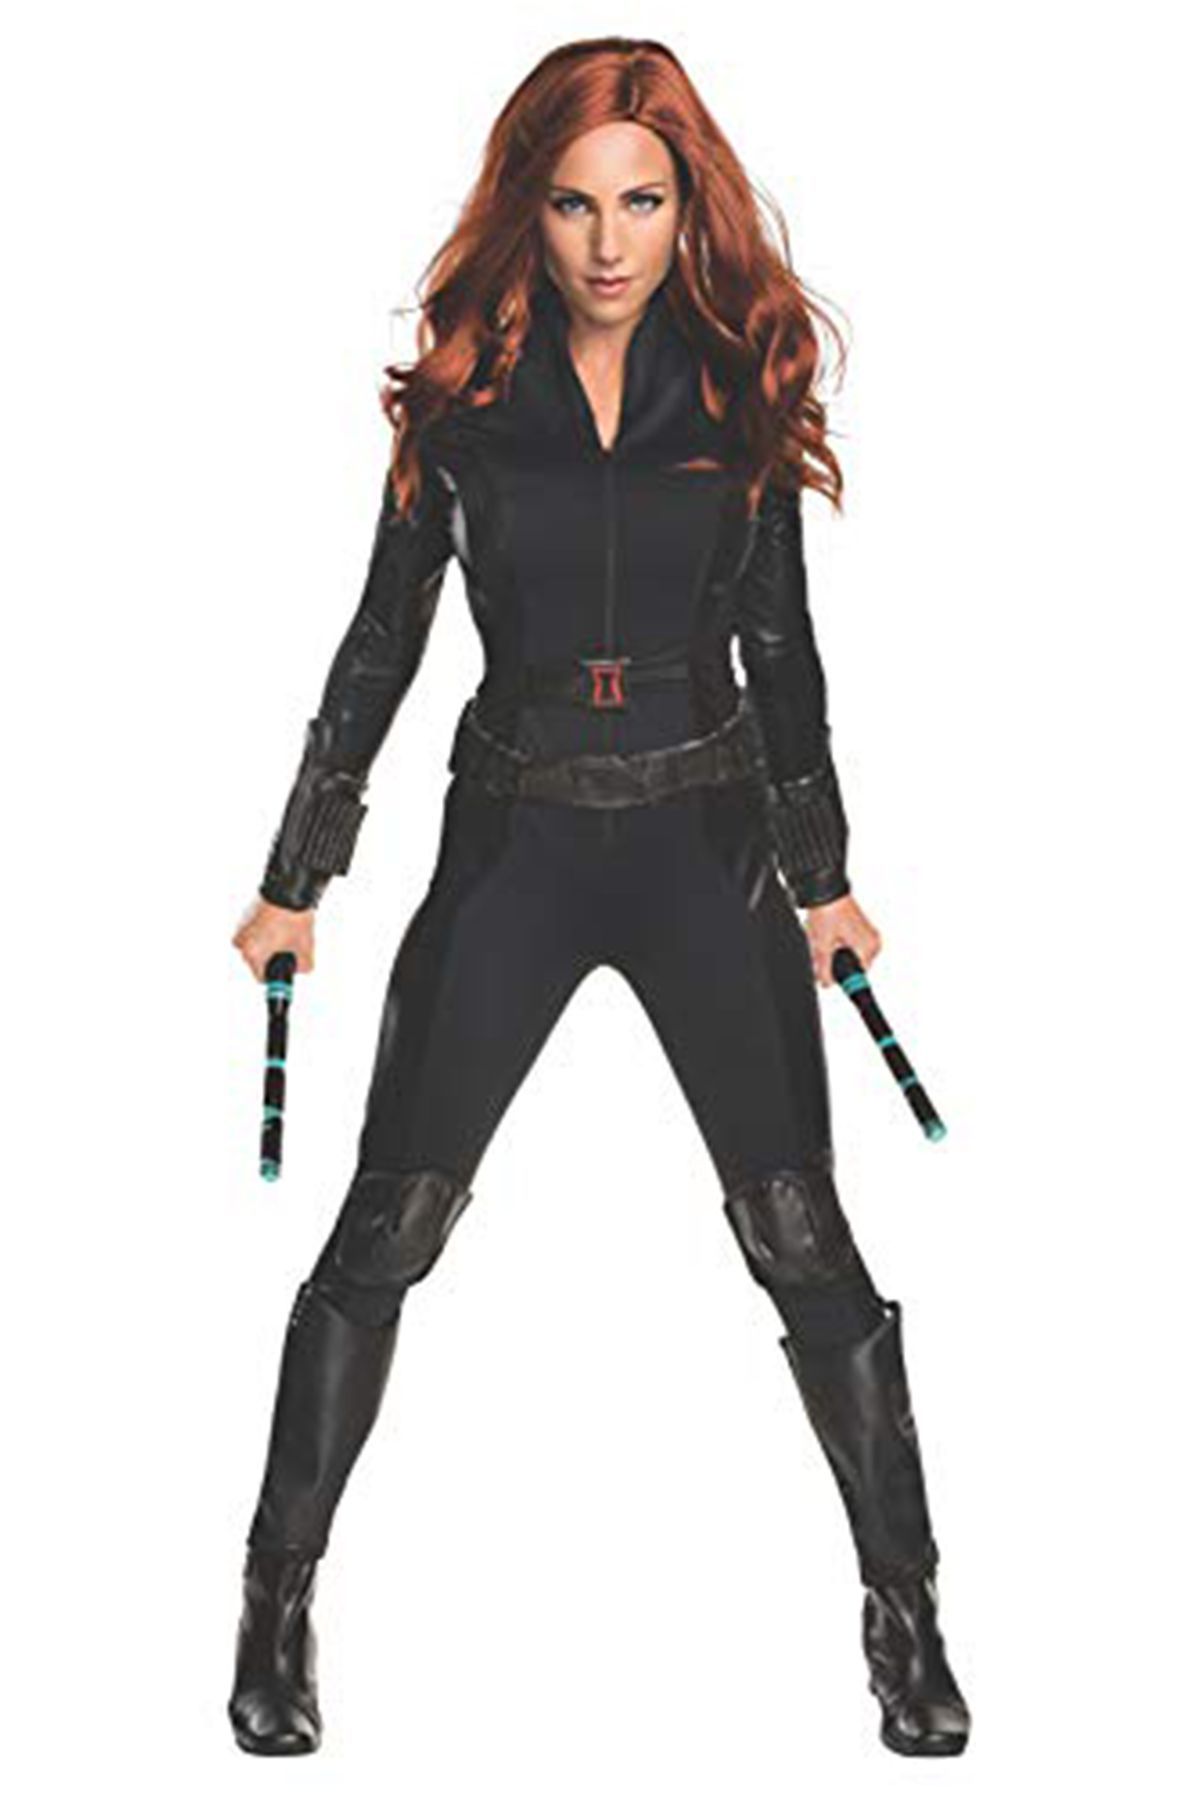 Black Widow Costume Tutorials Black Widow Costume Marvel Costumes Black Widow Outfit